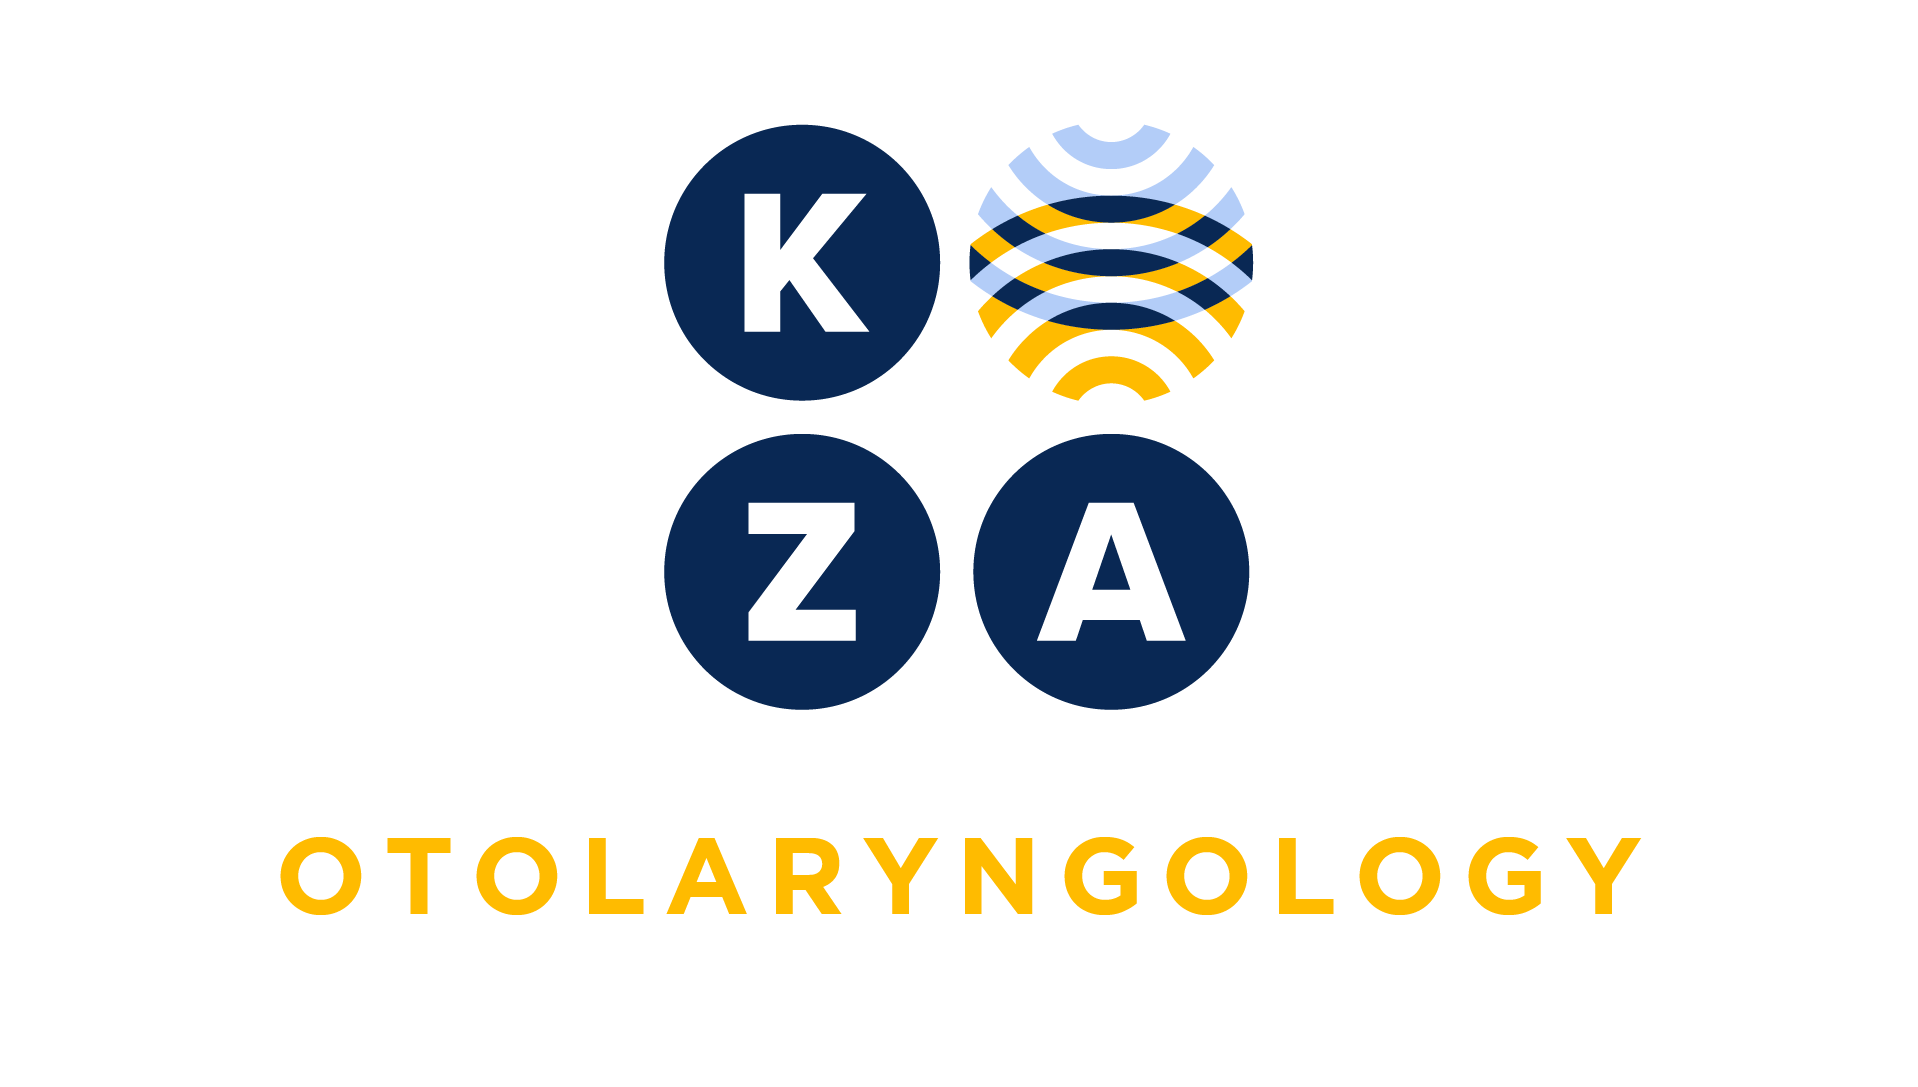 KZA - Otolaryngology (ENT) - Coding Coach